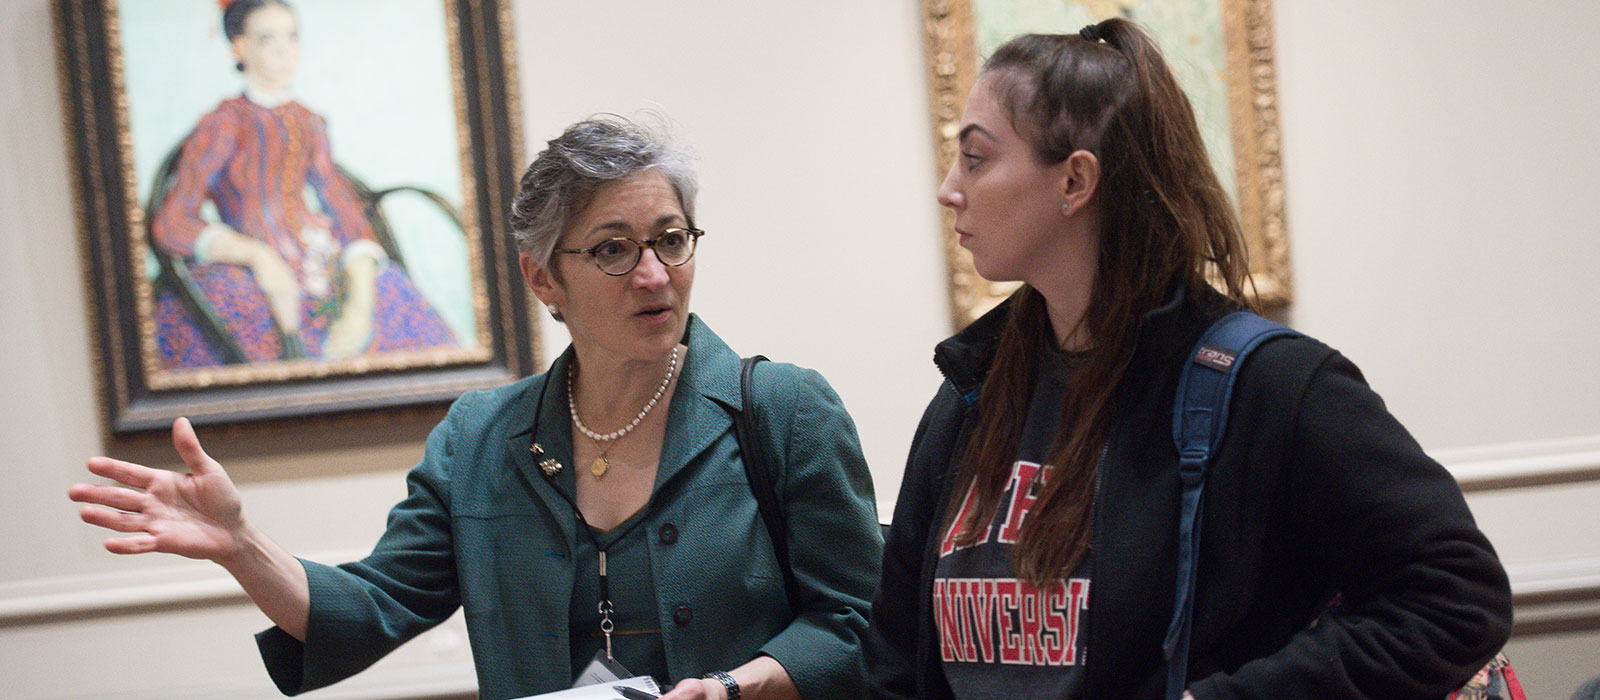 Professor talking to student in art museum